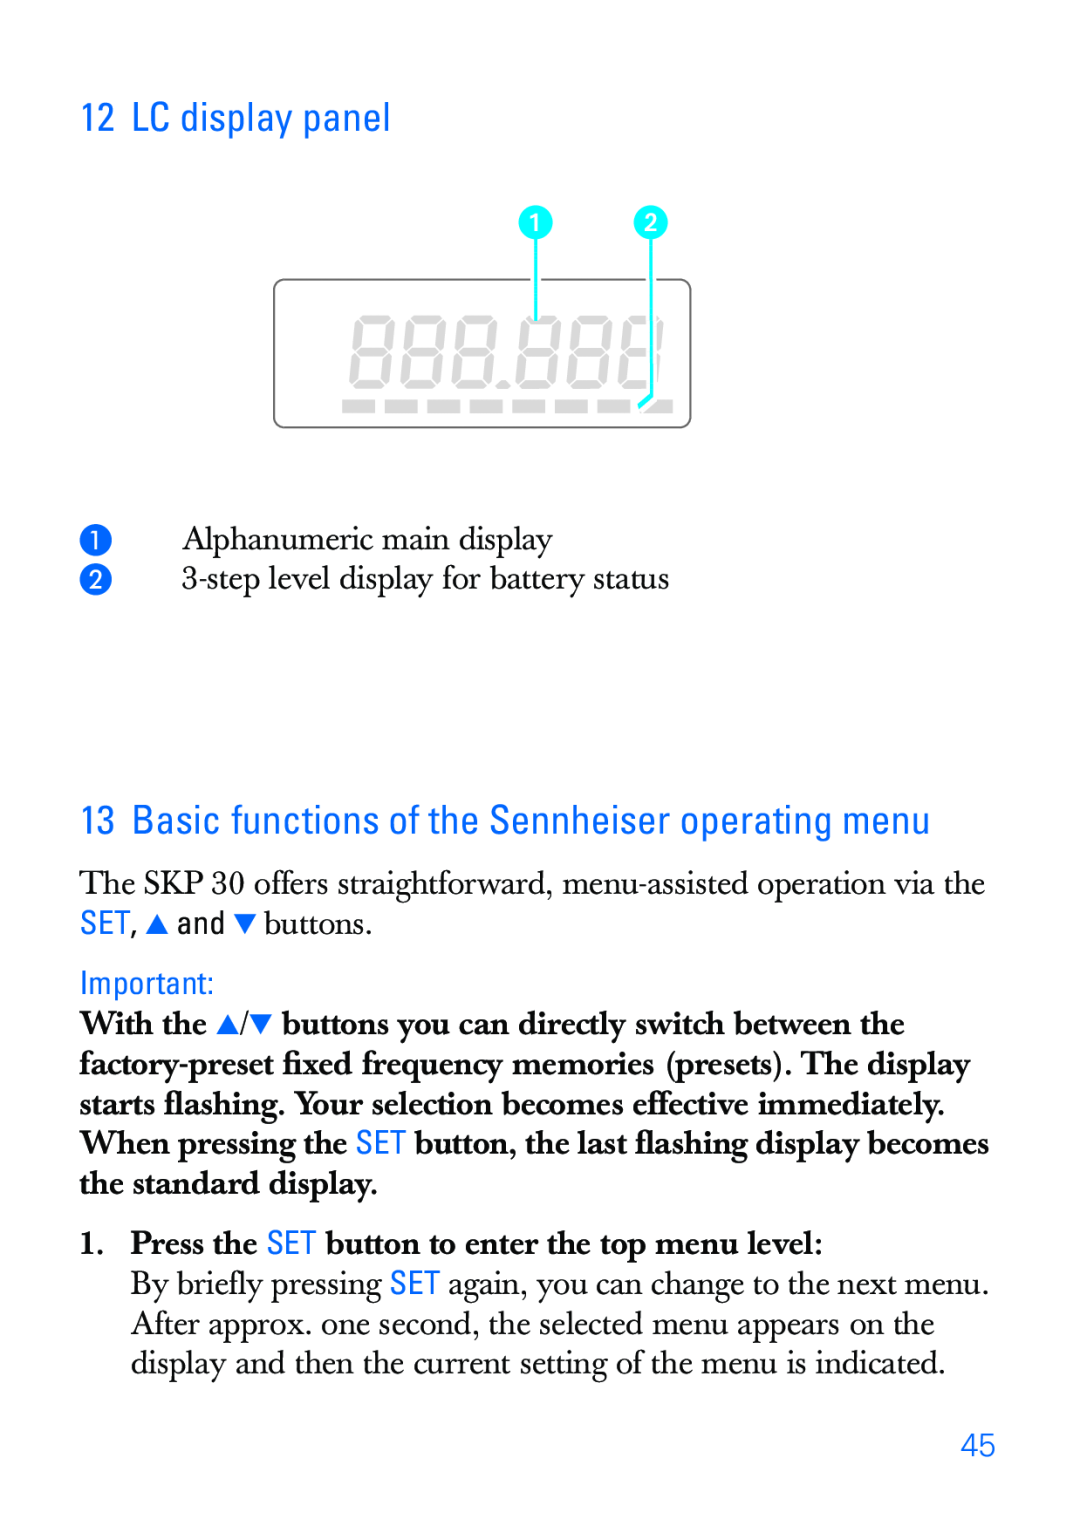 Sennheiser SKP 30 manual LC display panel, Basic functions of the Sennheiser operating menu 